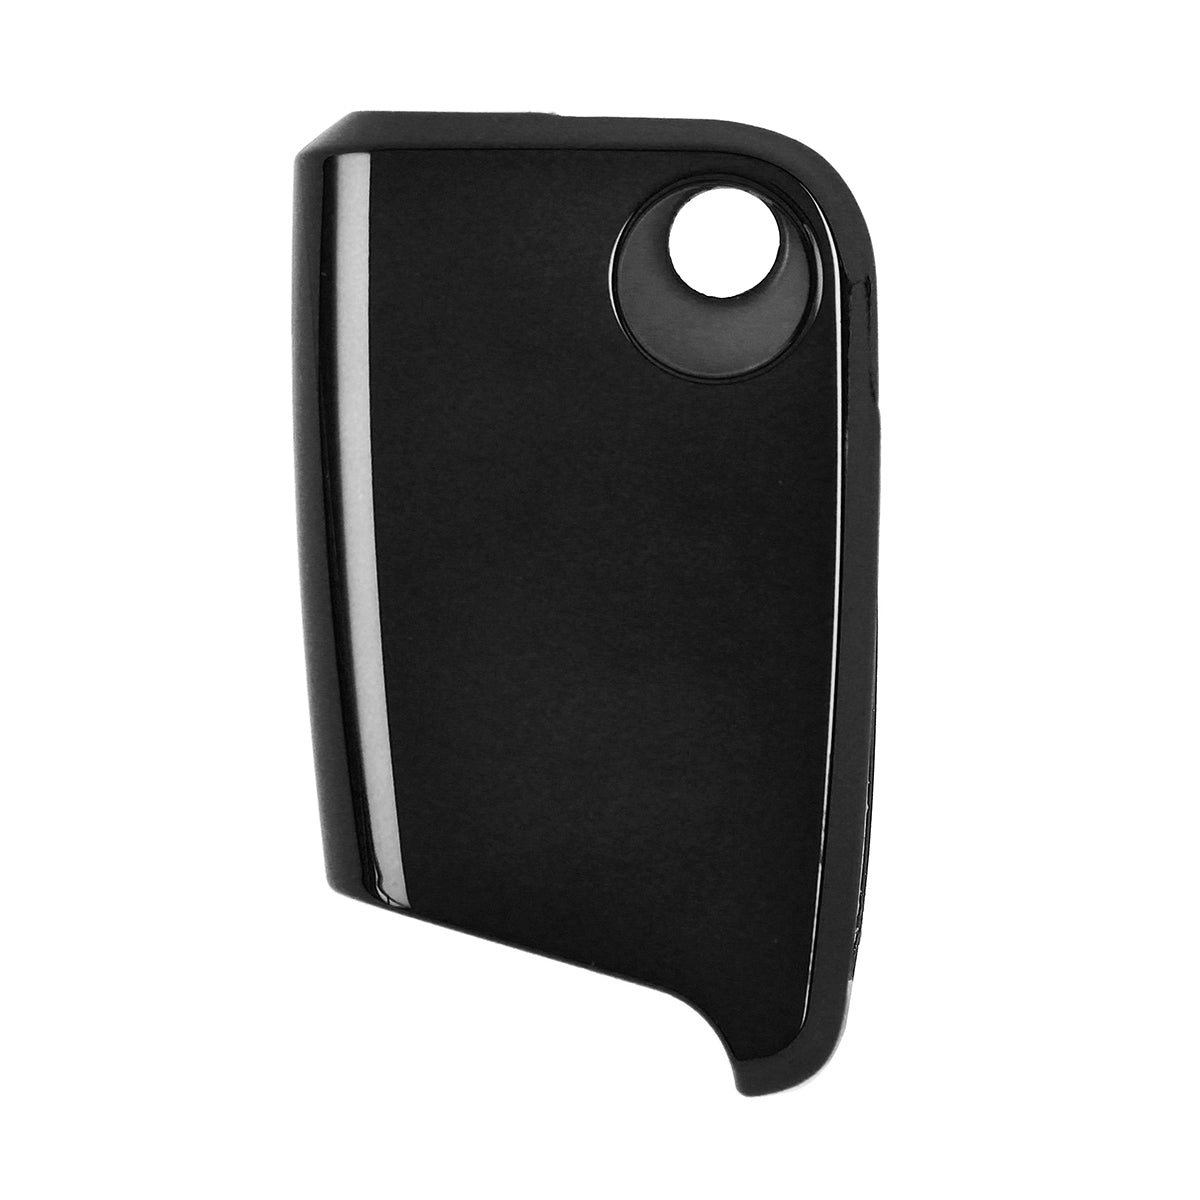 Black TPU Remote Protect Car Key Case Cover Shell For VW TIGUAN Golf Skoda Octavia